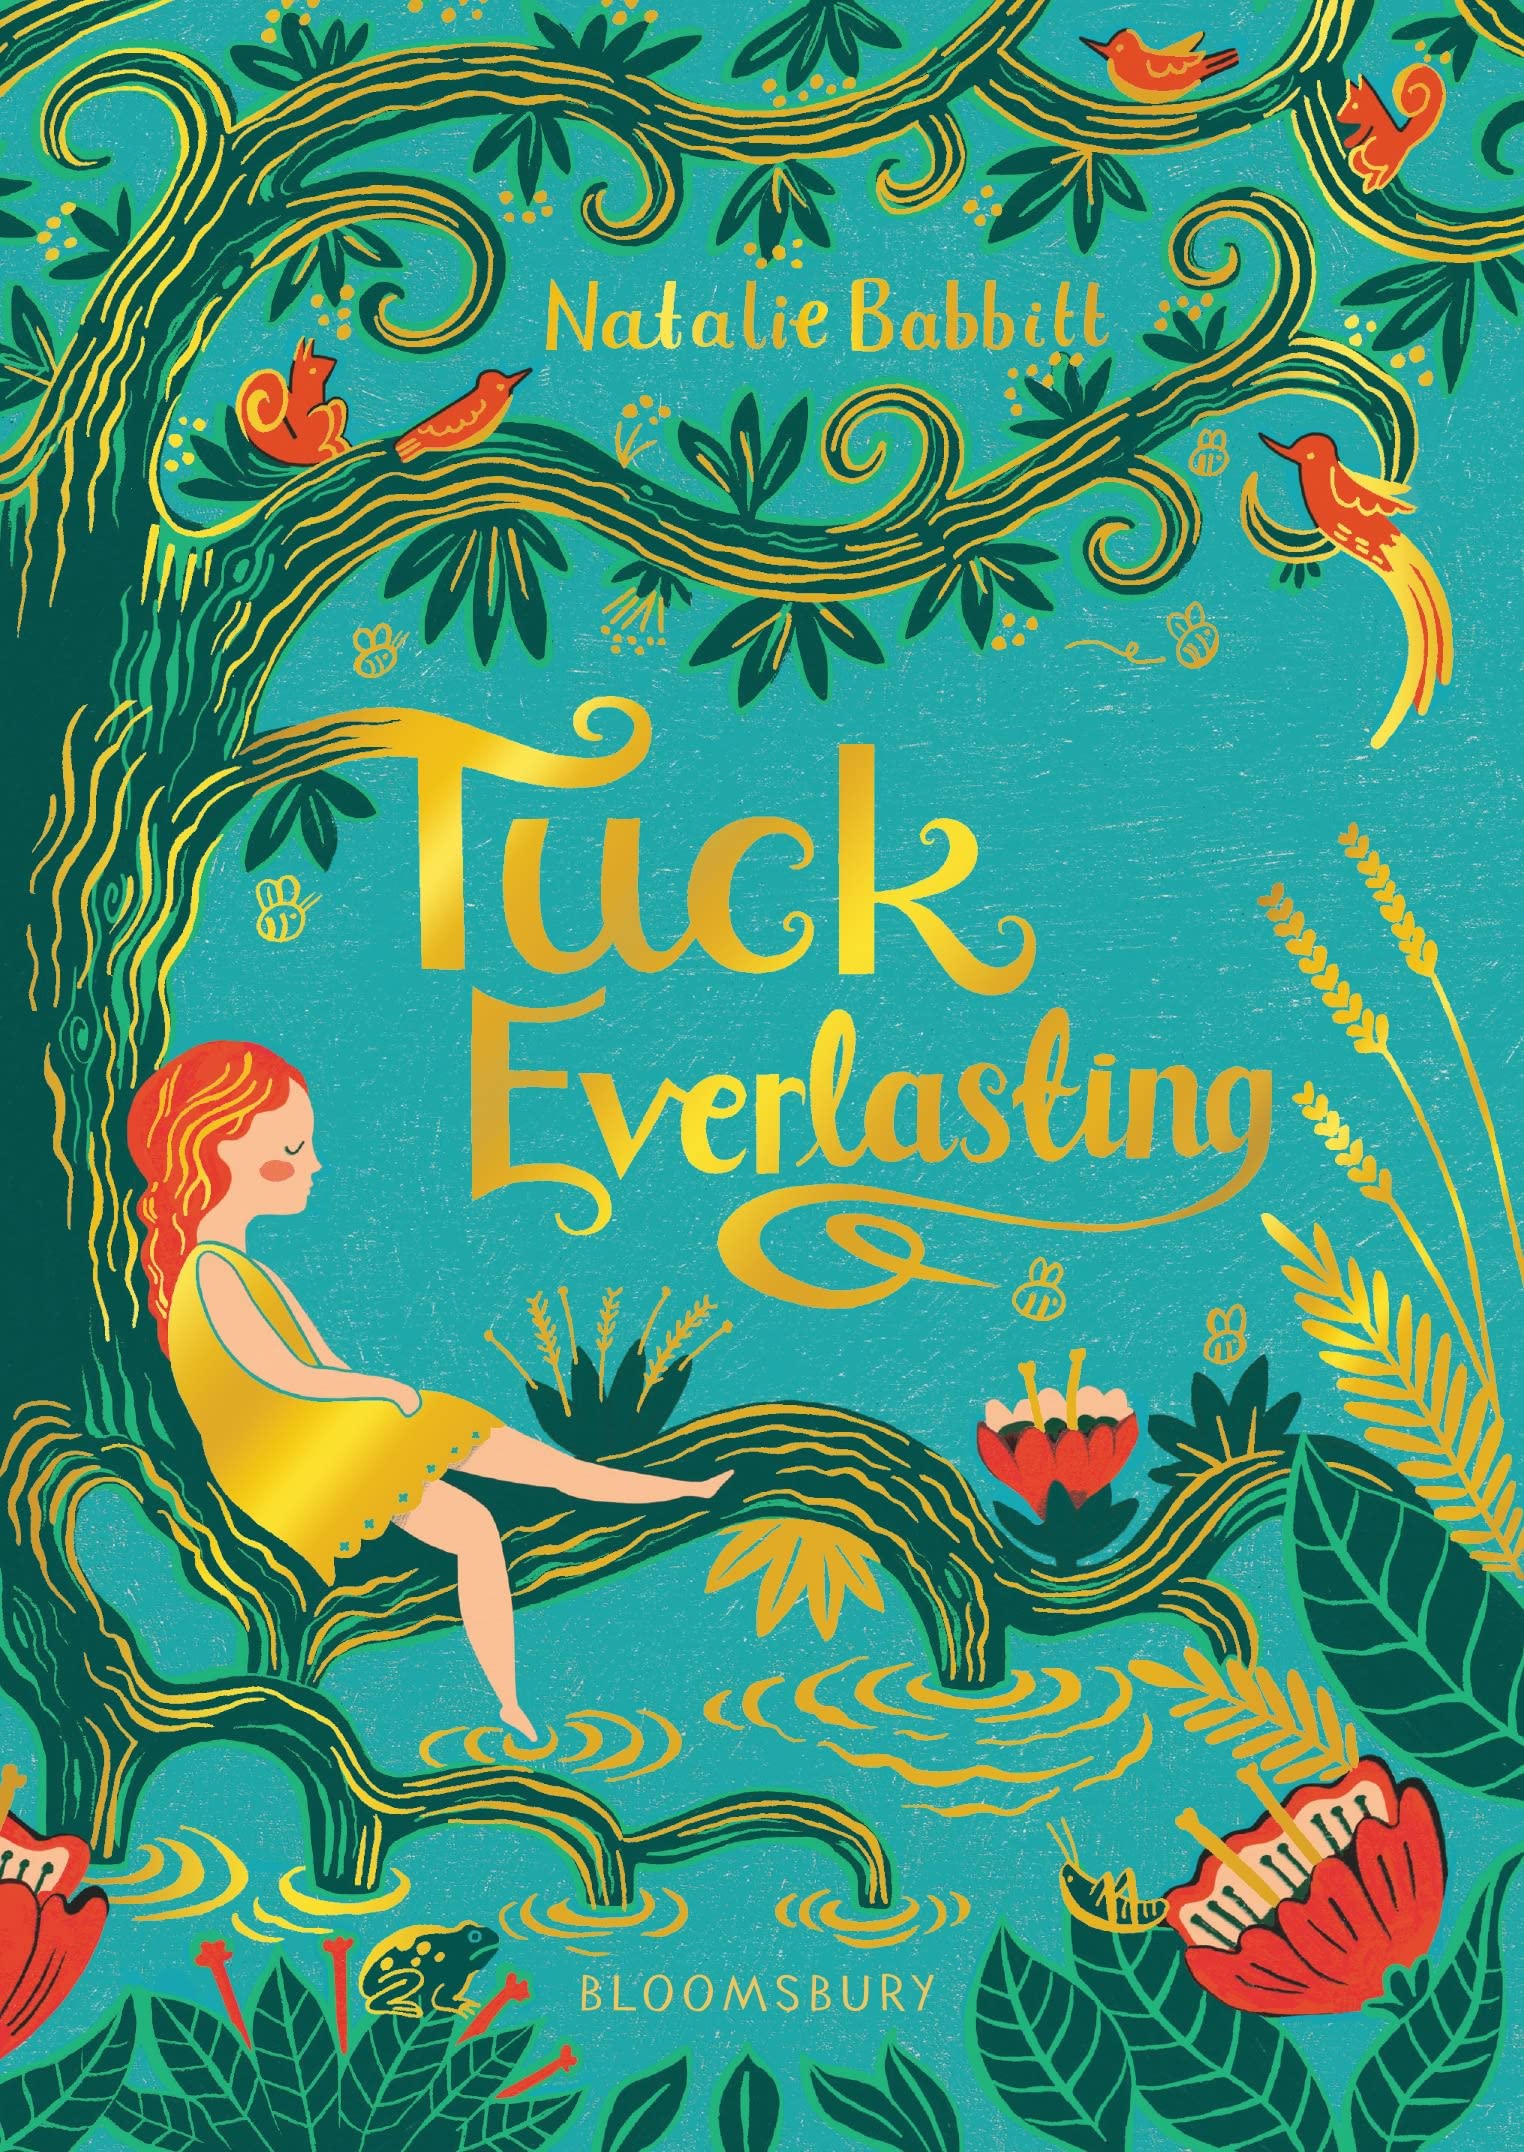 Tuck Everlasting (Paperback)